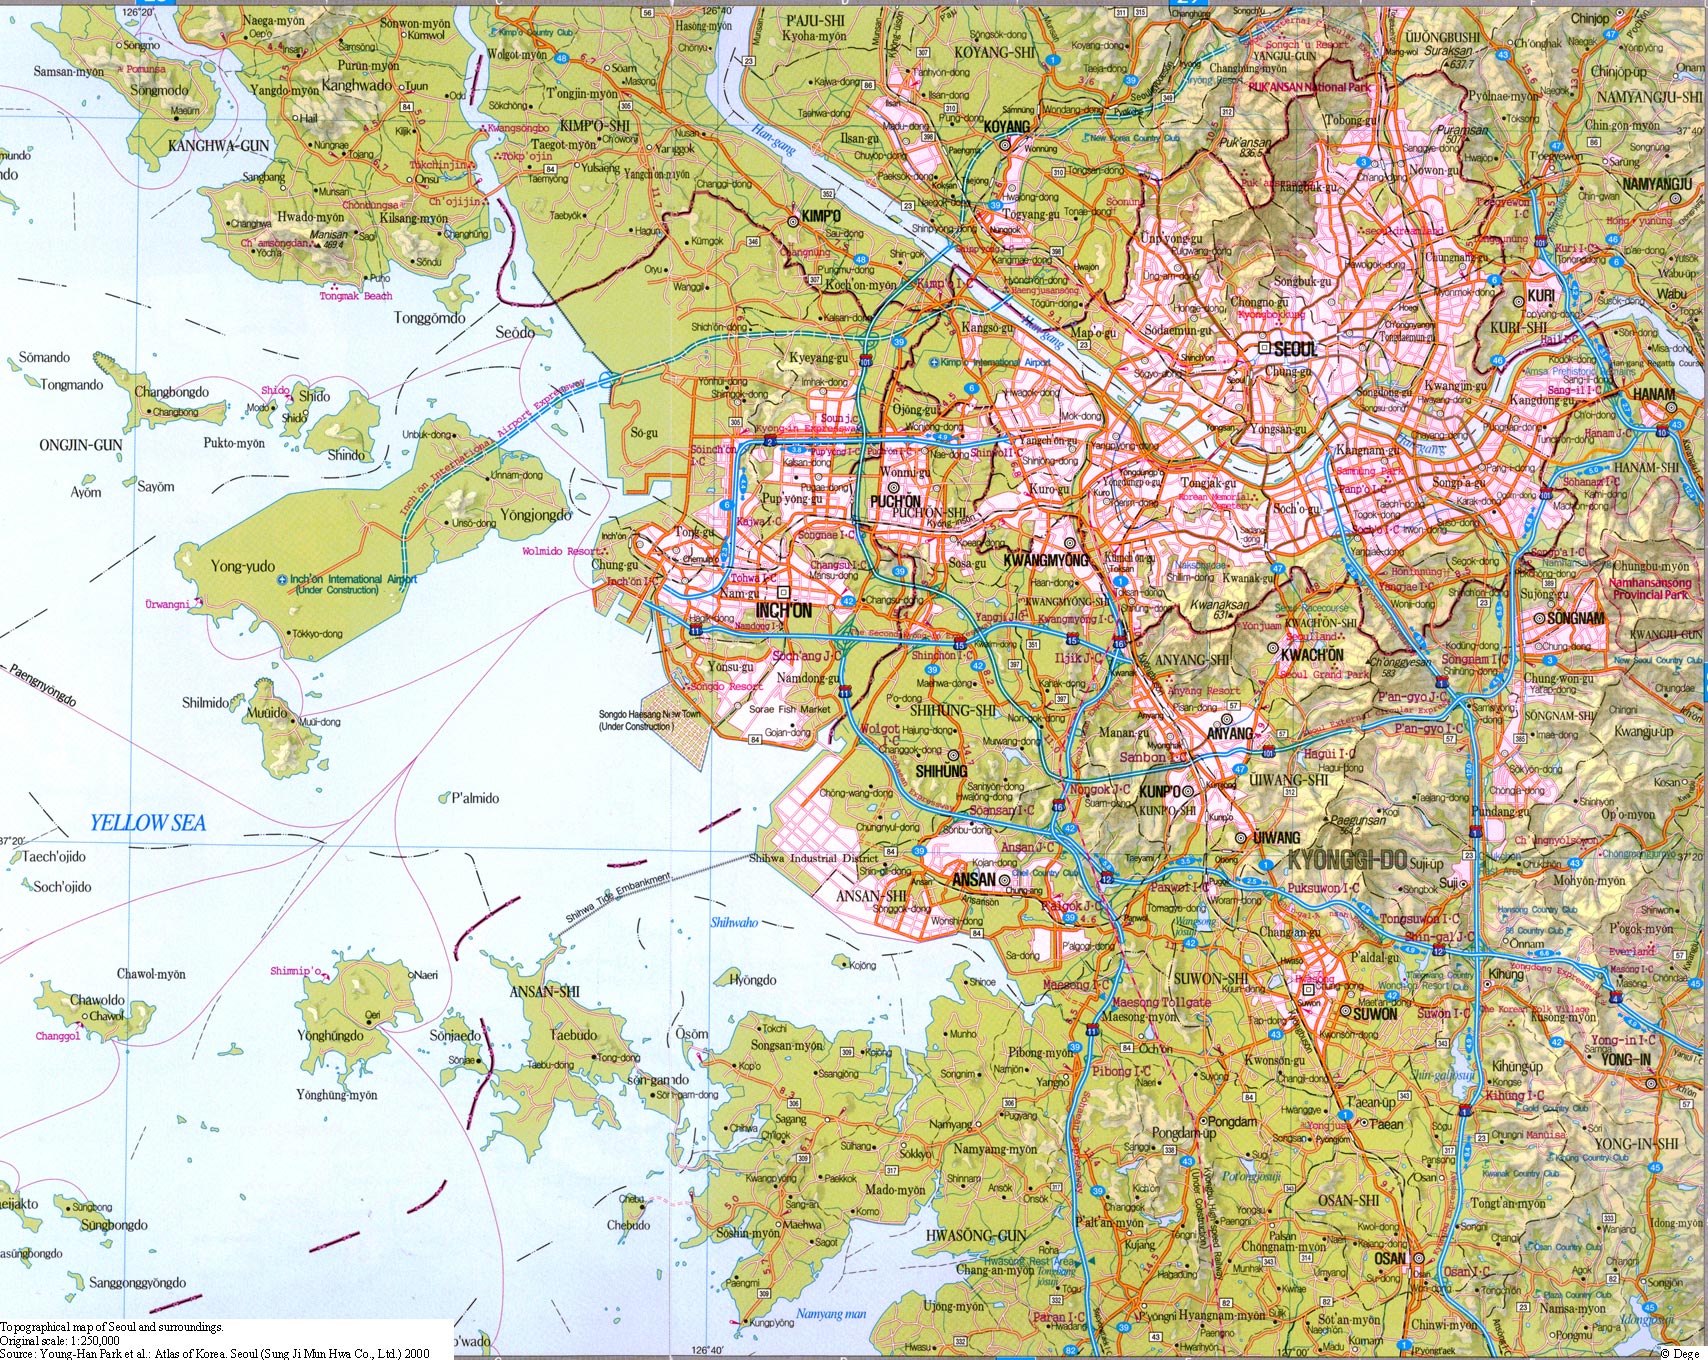 Map around Seoul